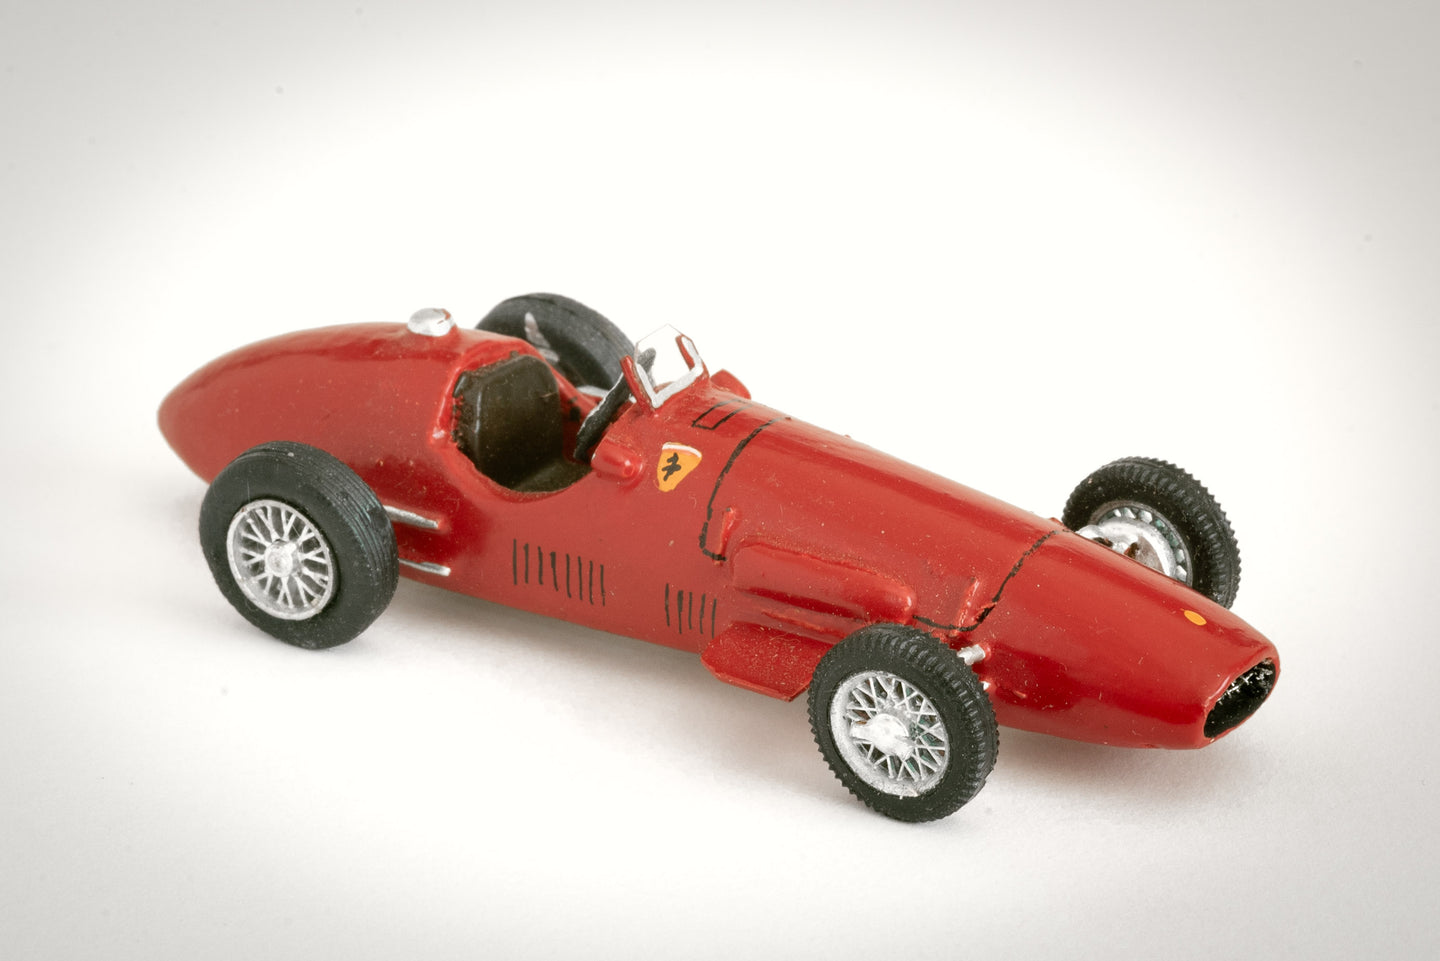 RD Marmande - 1952 Ferrari 500 F2 Grand Prix Car